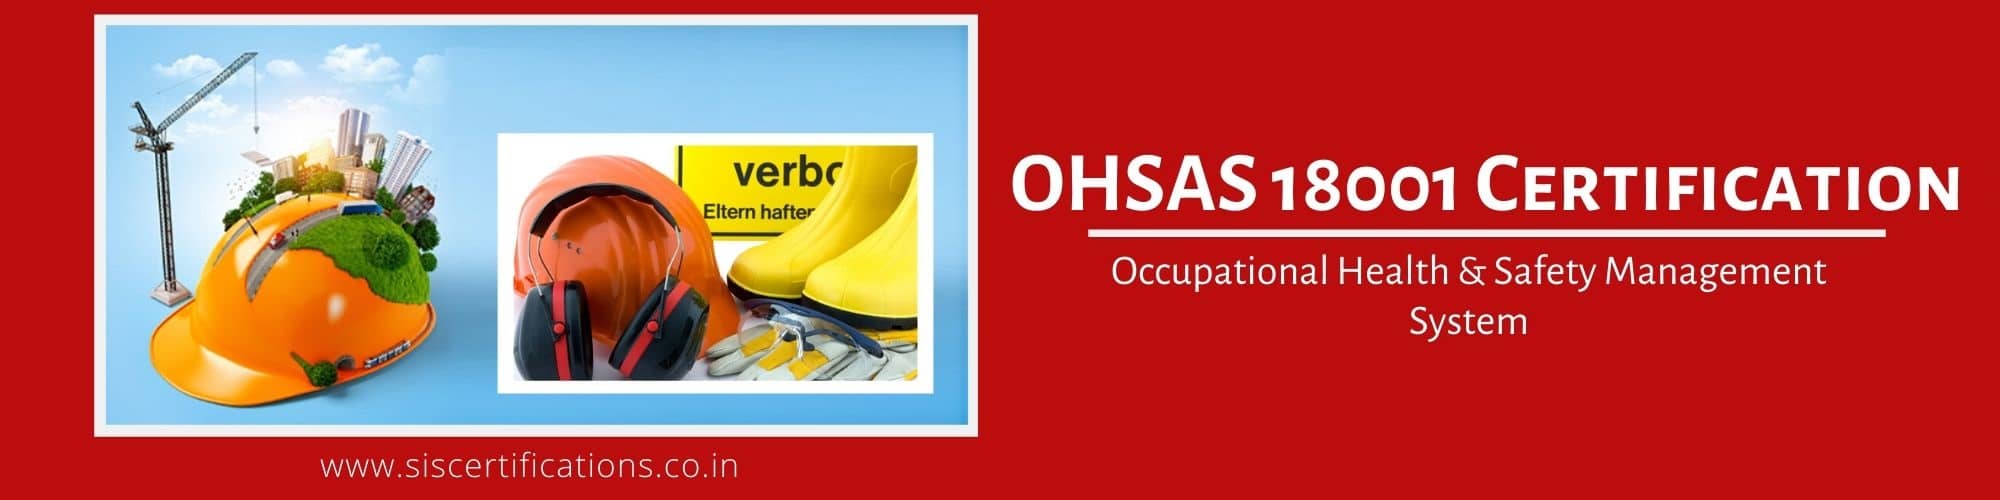 OHSAS 18001 Certification;